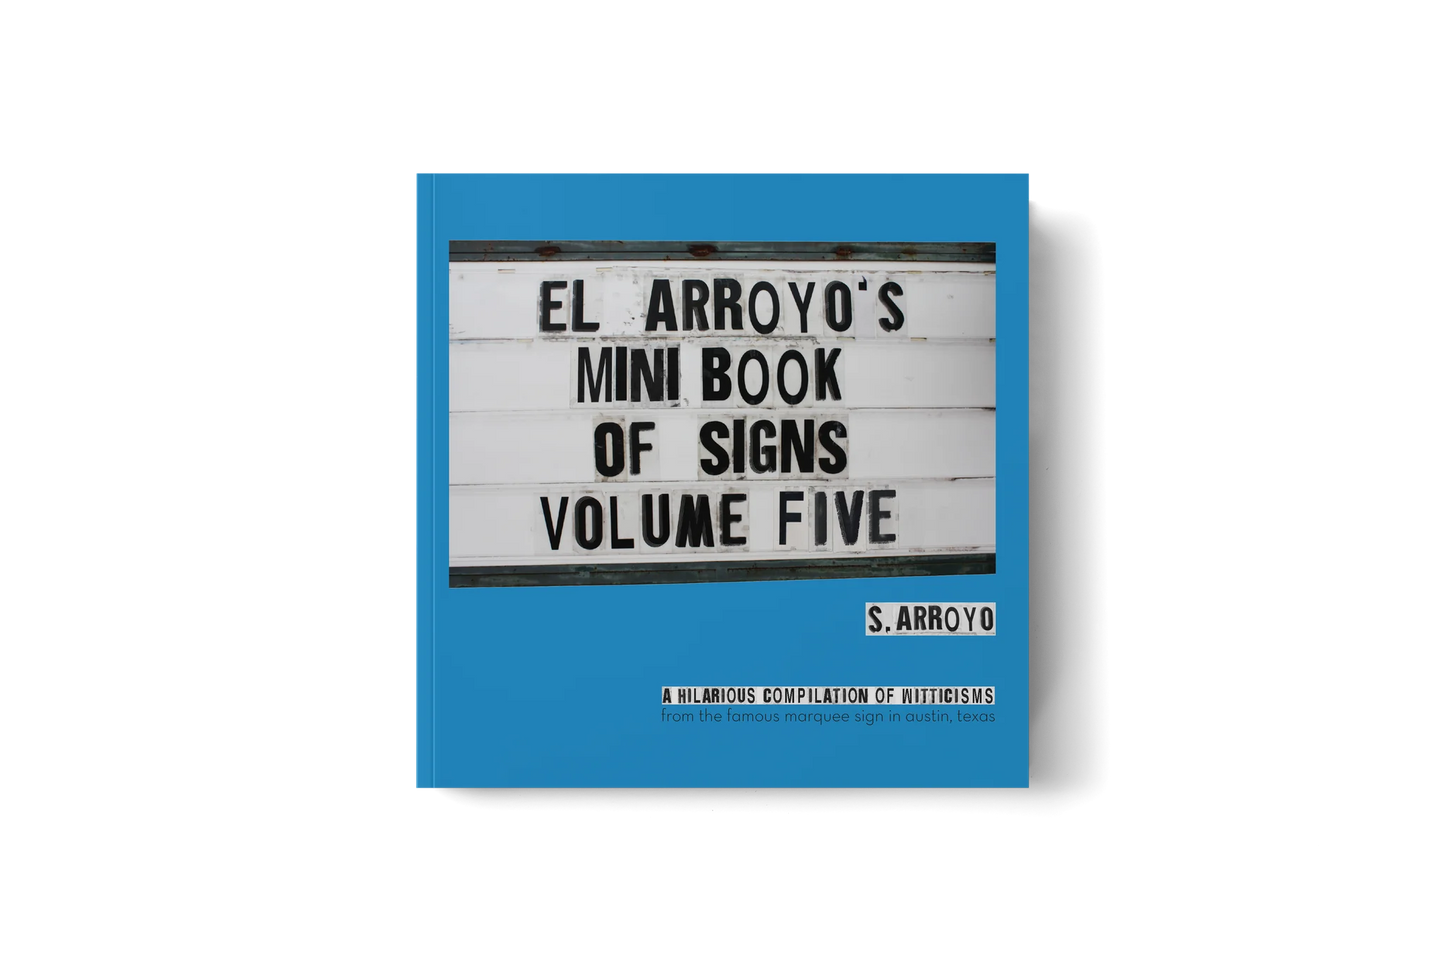 El Arroyo mini book of signs volume five